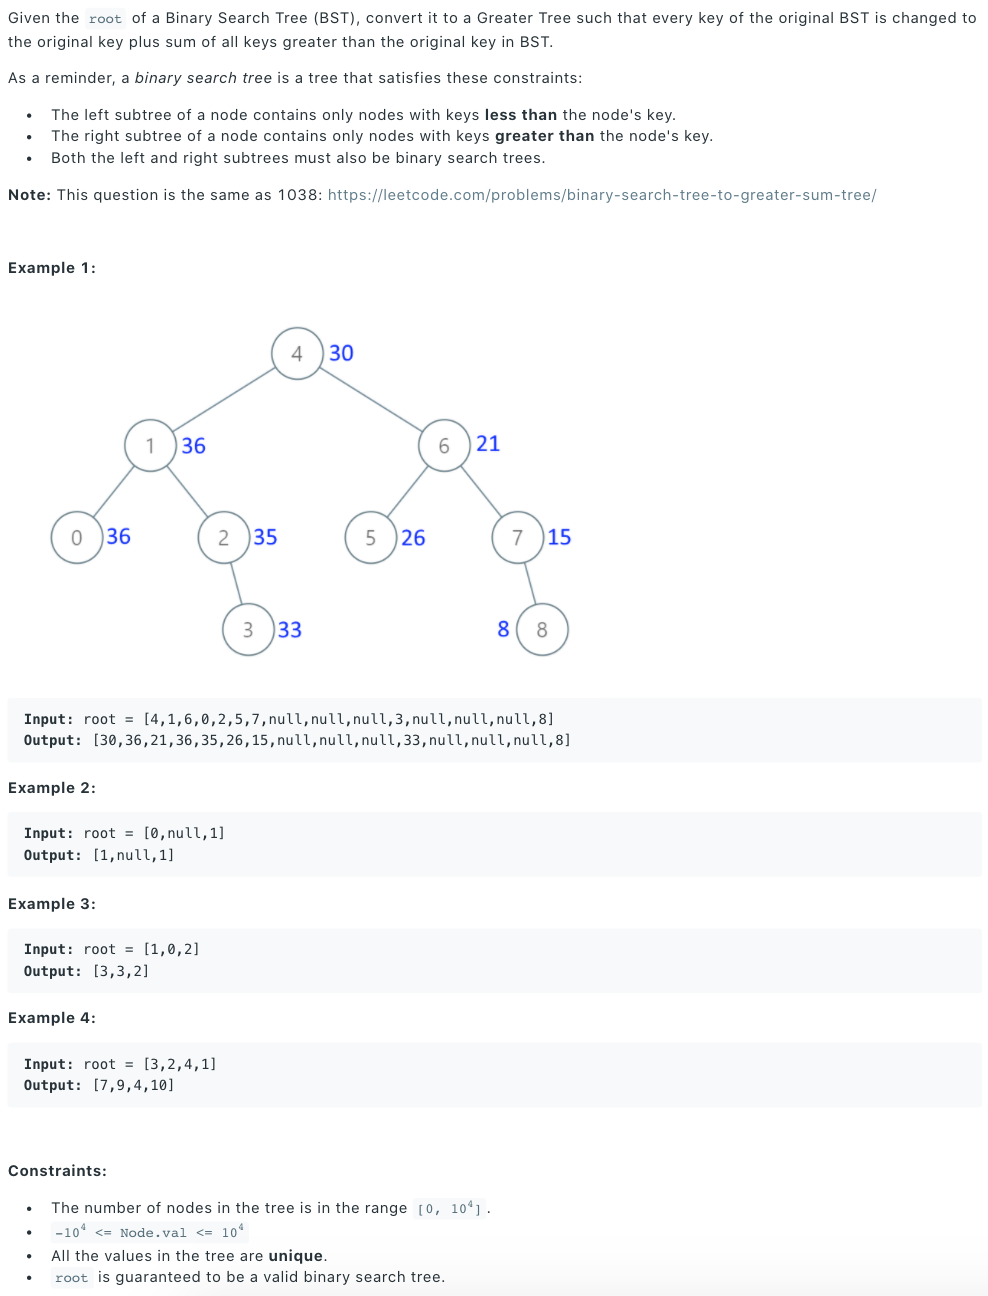 https://leetcode.com/problems/convert-bst-to-greater-tree